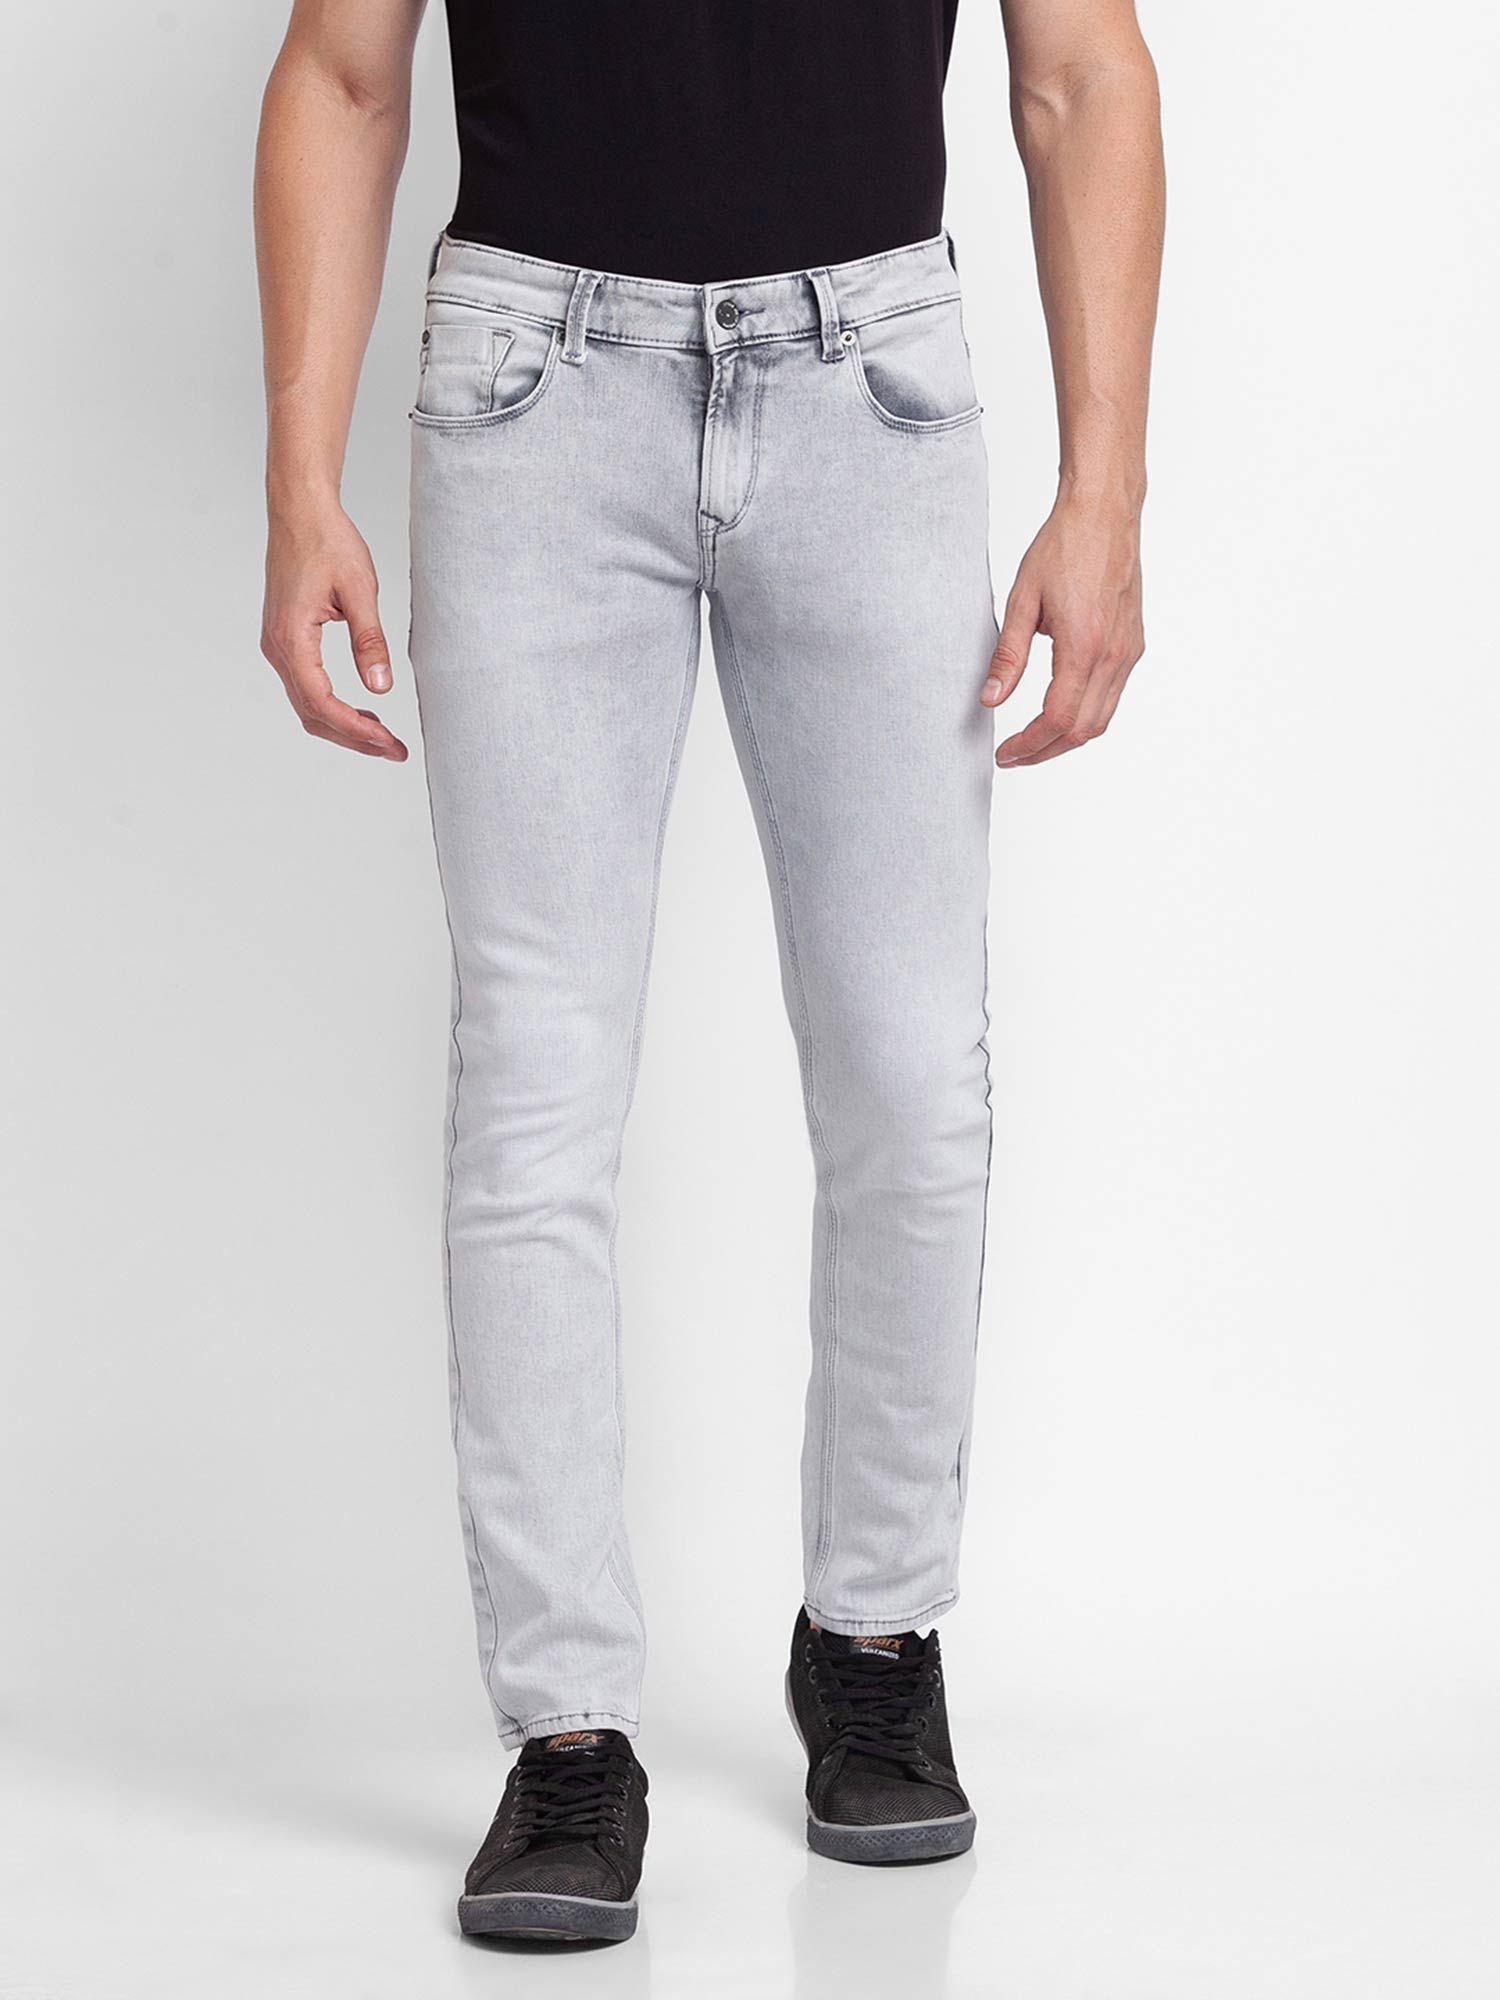 light grey cotton slim fit narrow length jeans for men (skinny)